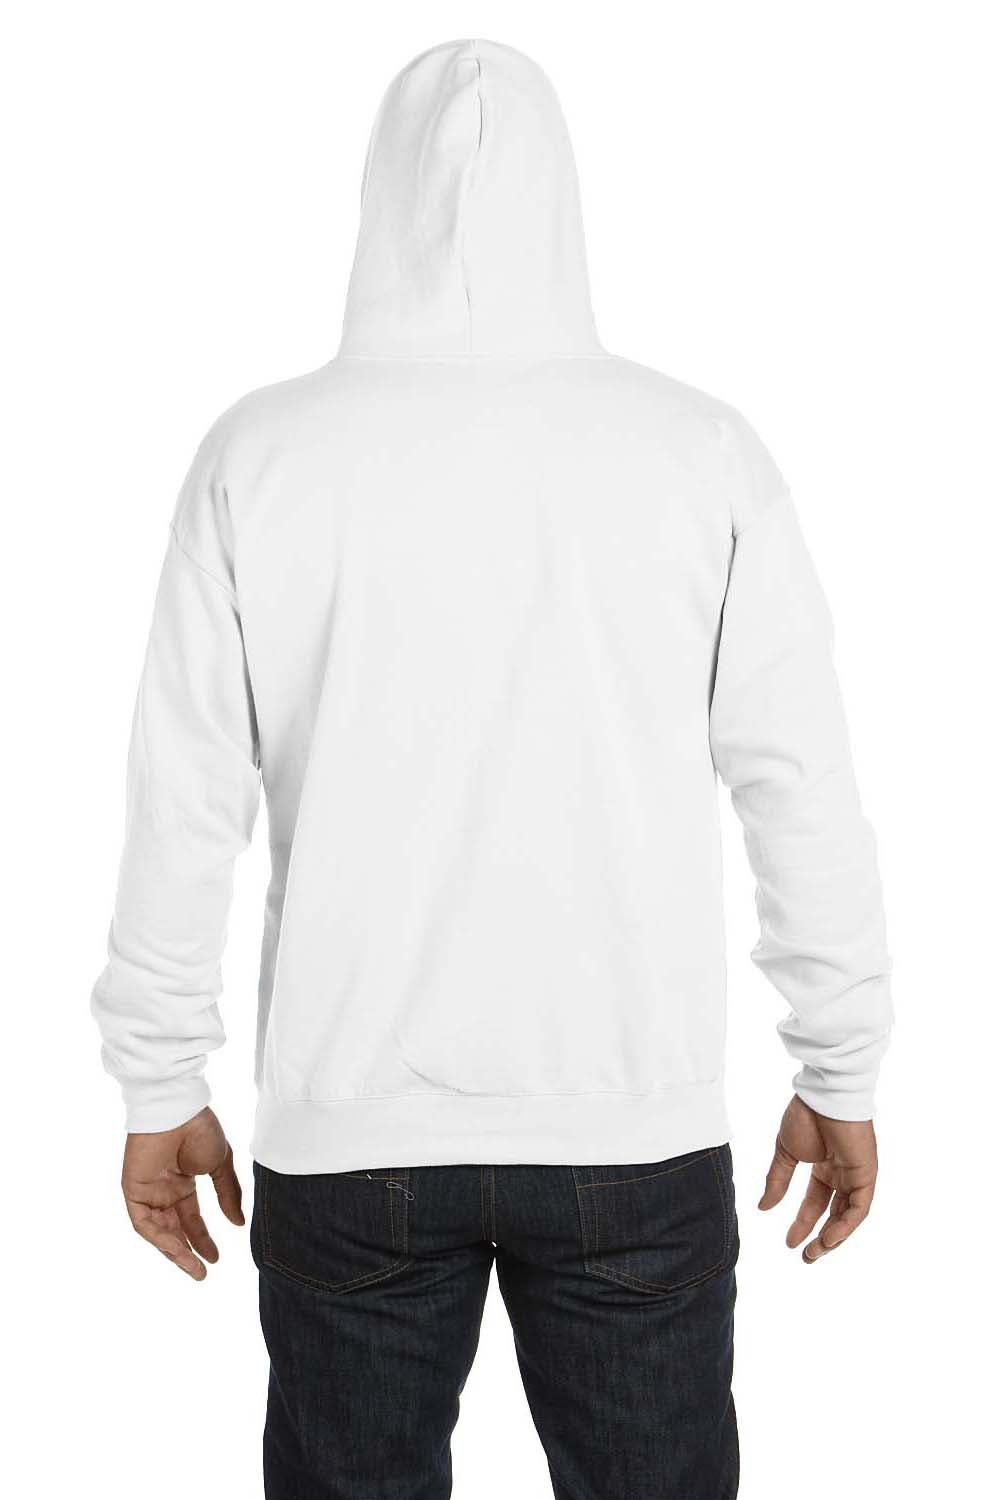 Hanes P180 Mens EcoSmart Print Pro XP Full Zip Hooded Sweatshirt Hoodie White Back